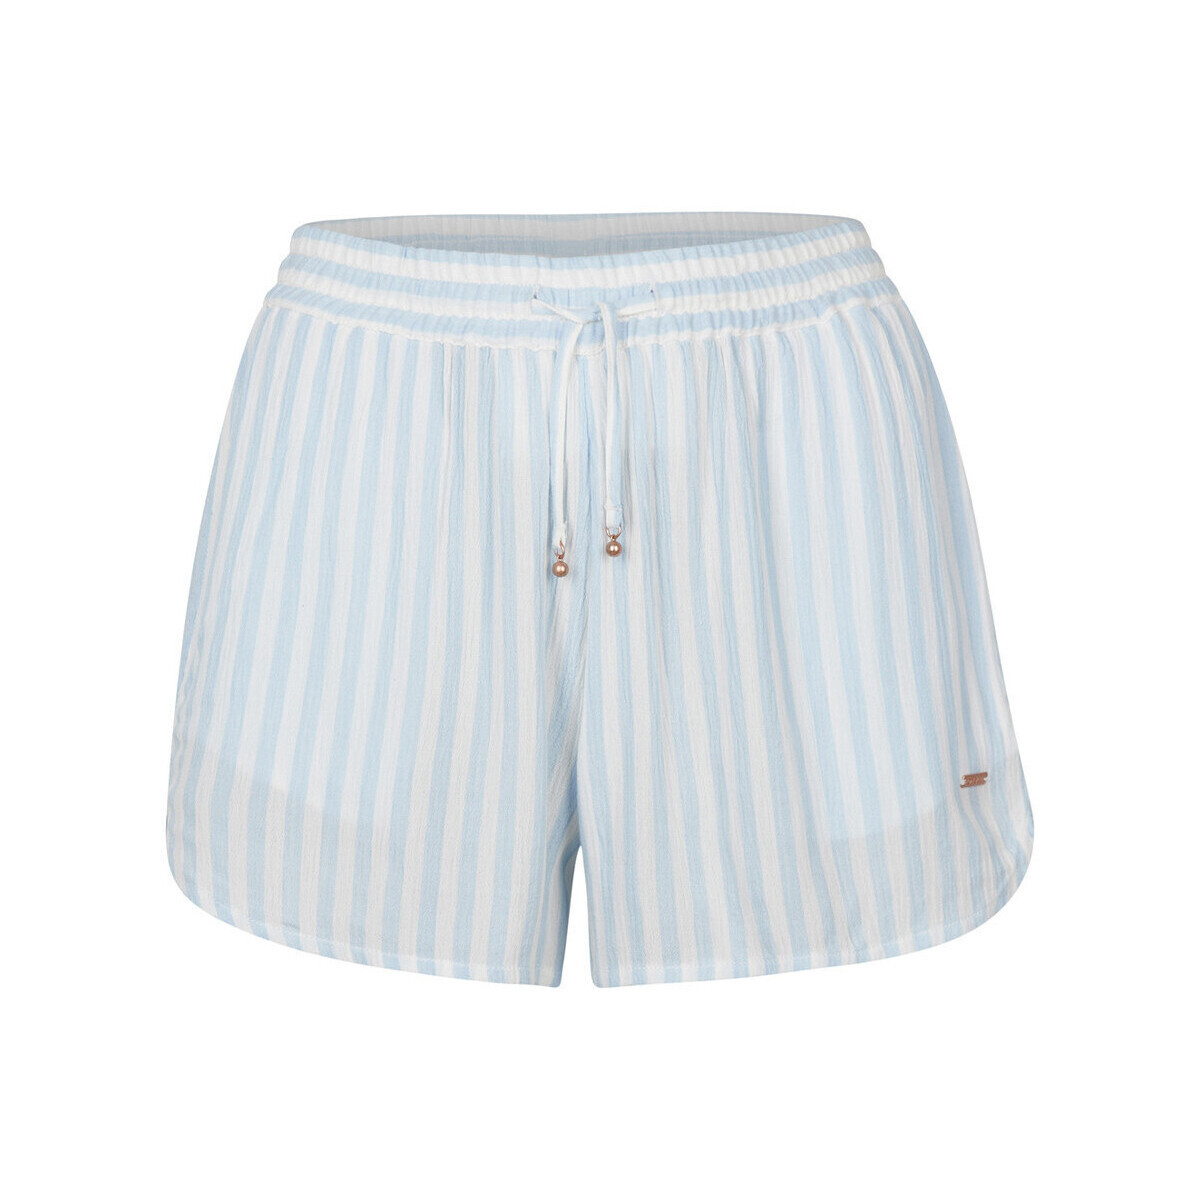 Kleidung Damen Shorts / Bermudas O'neill 1700012-35080 Blau